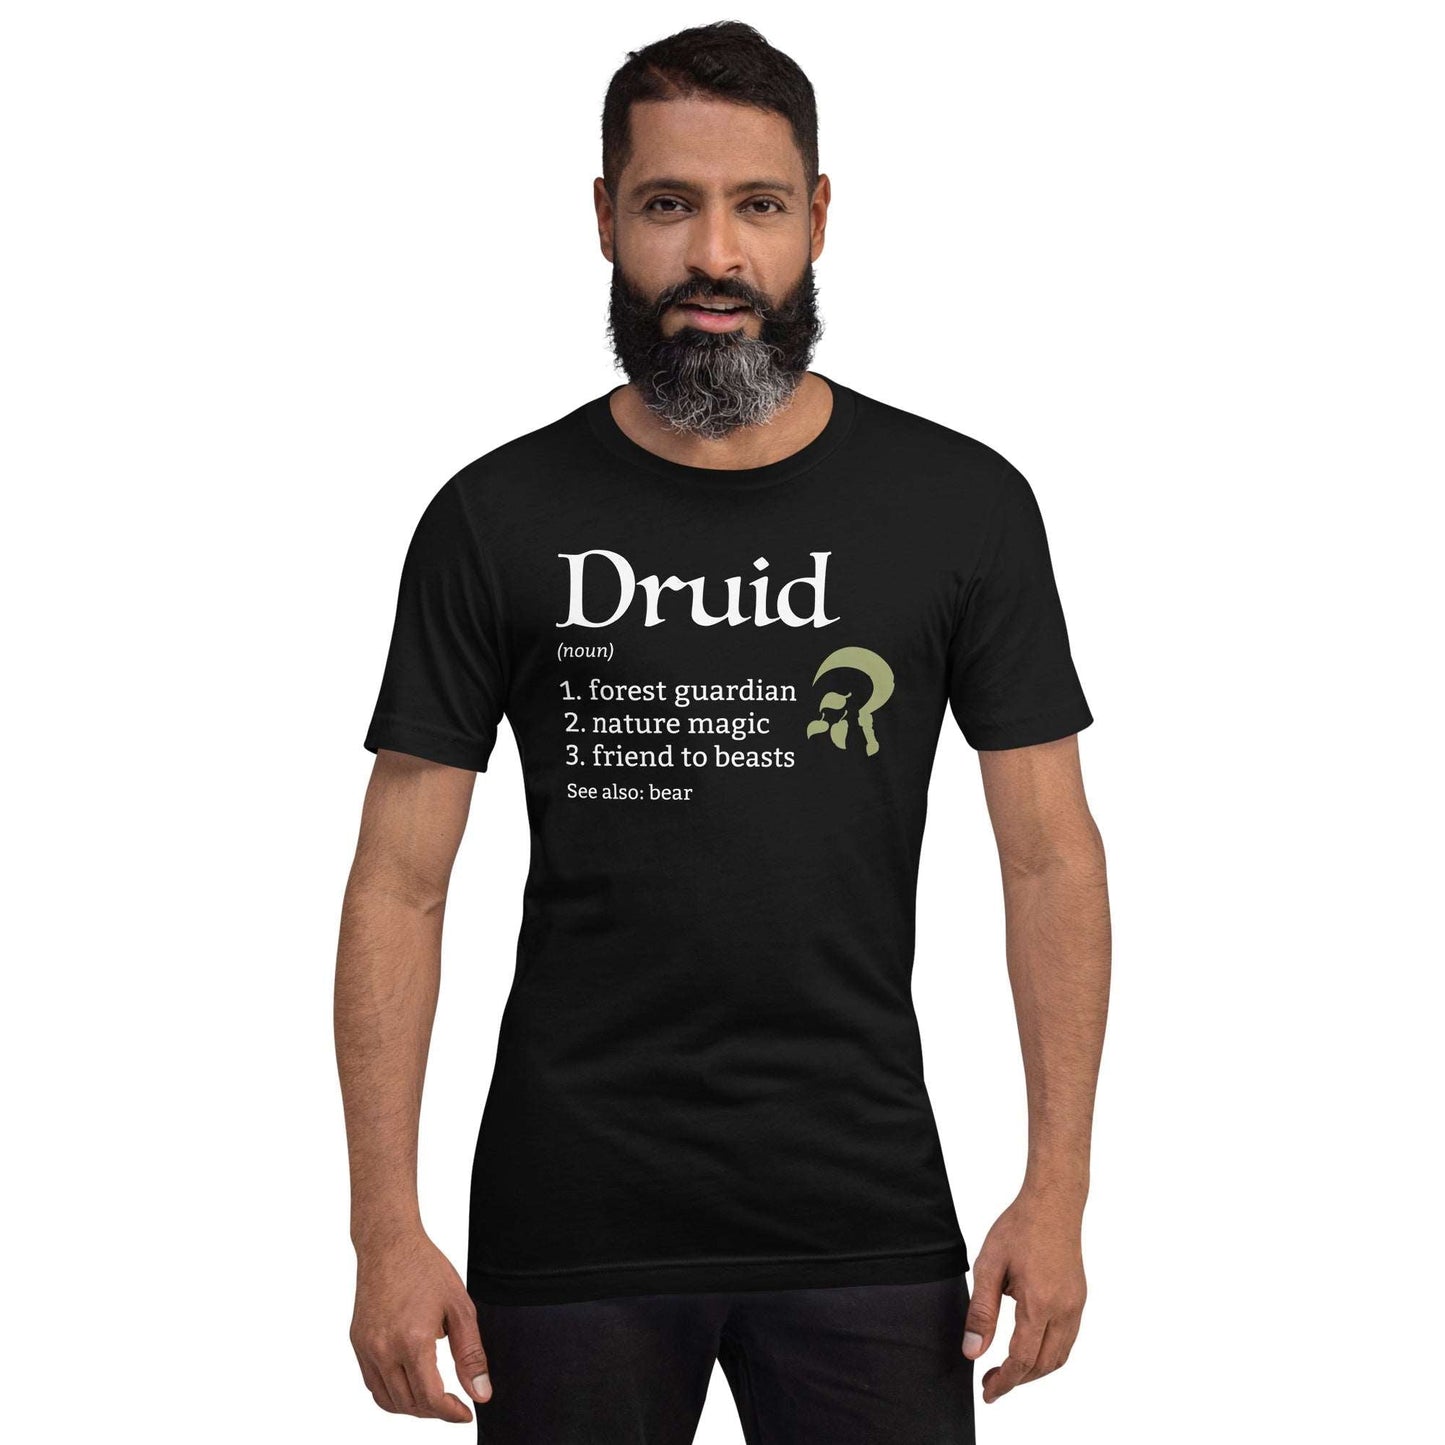 Druid Class Definition T-Shirt – Funny DnD Definition Tee T-Shirt